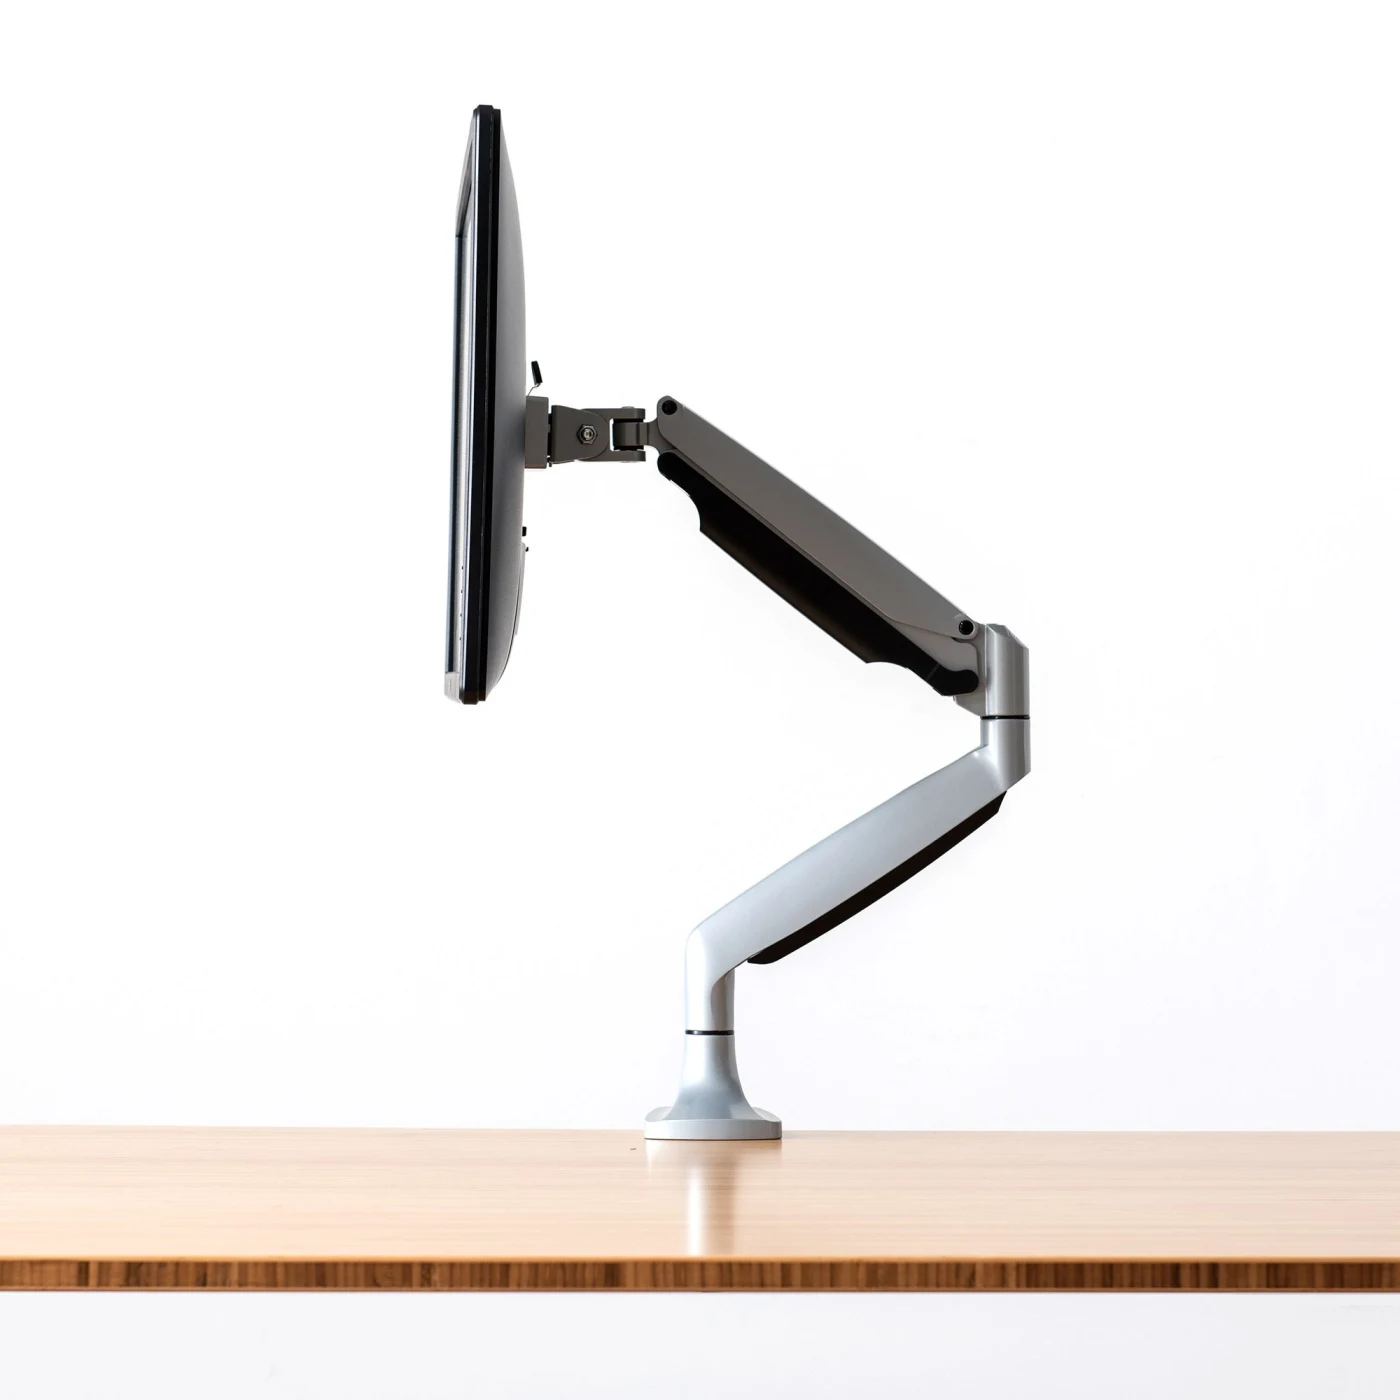 Monitor arm braced at a desk, holding a monitor sideways